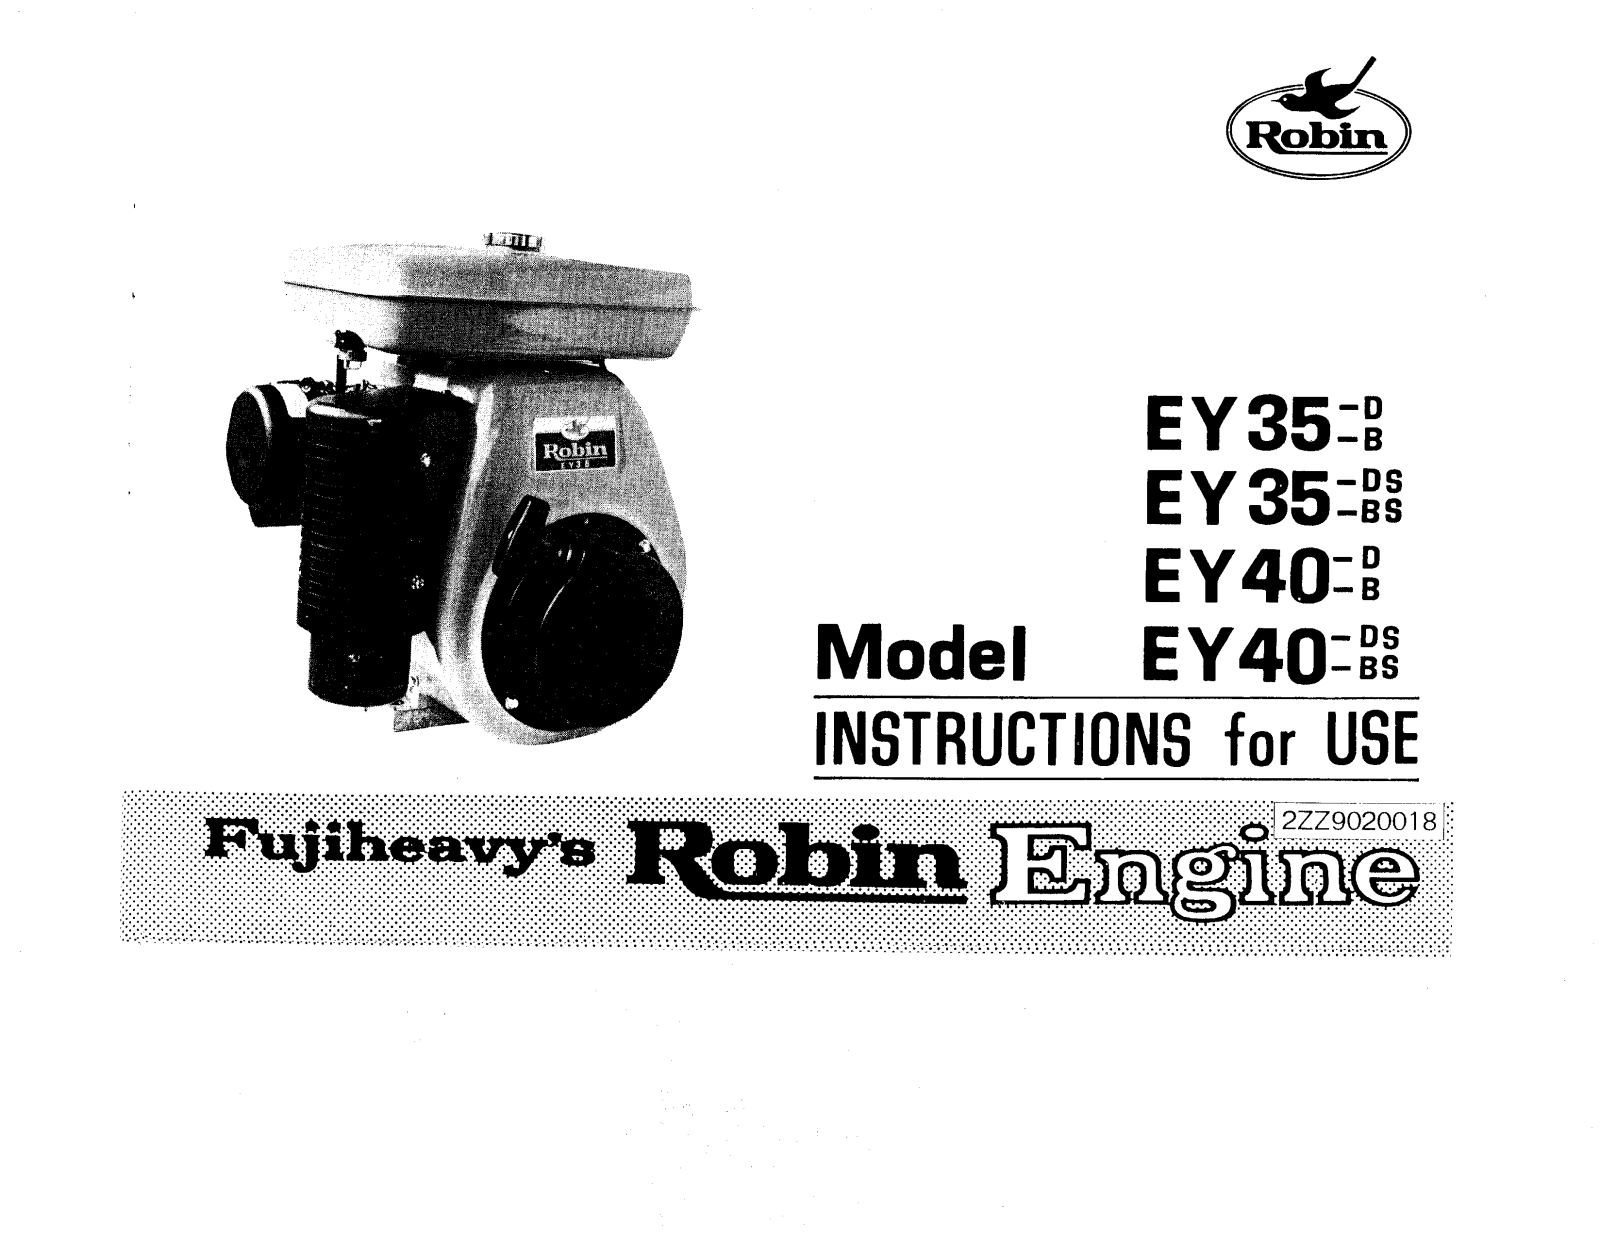 Robin EY40-D, EY40-DS, EY40-B, EY35-D, EY35-BS User Manual